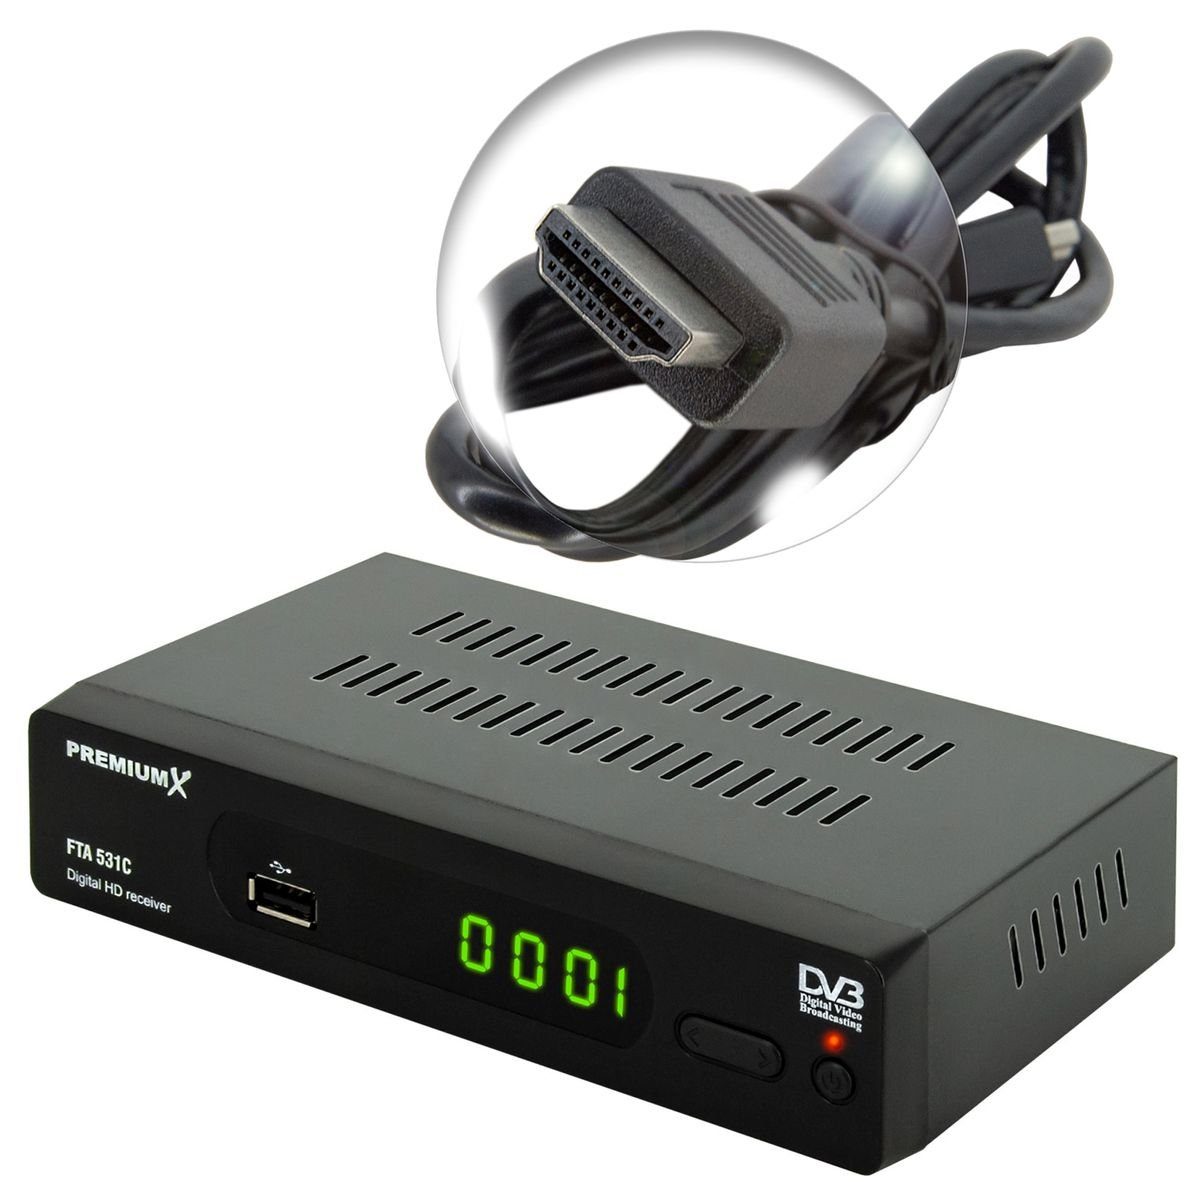 PremiumX FTA 531C Kabel Receiver SCART USB HDMI TV Digital FullHD DVB-C Kabel-Receiver